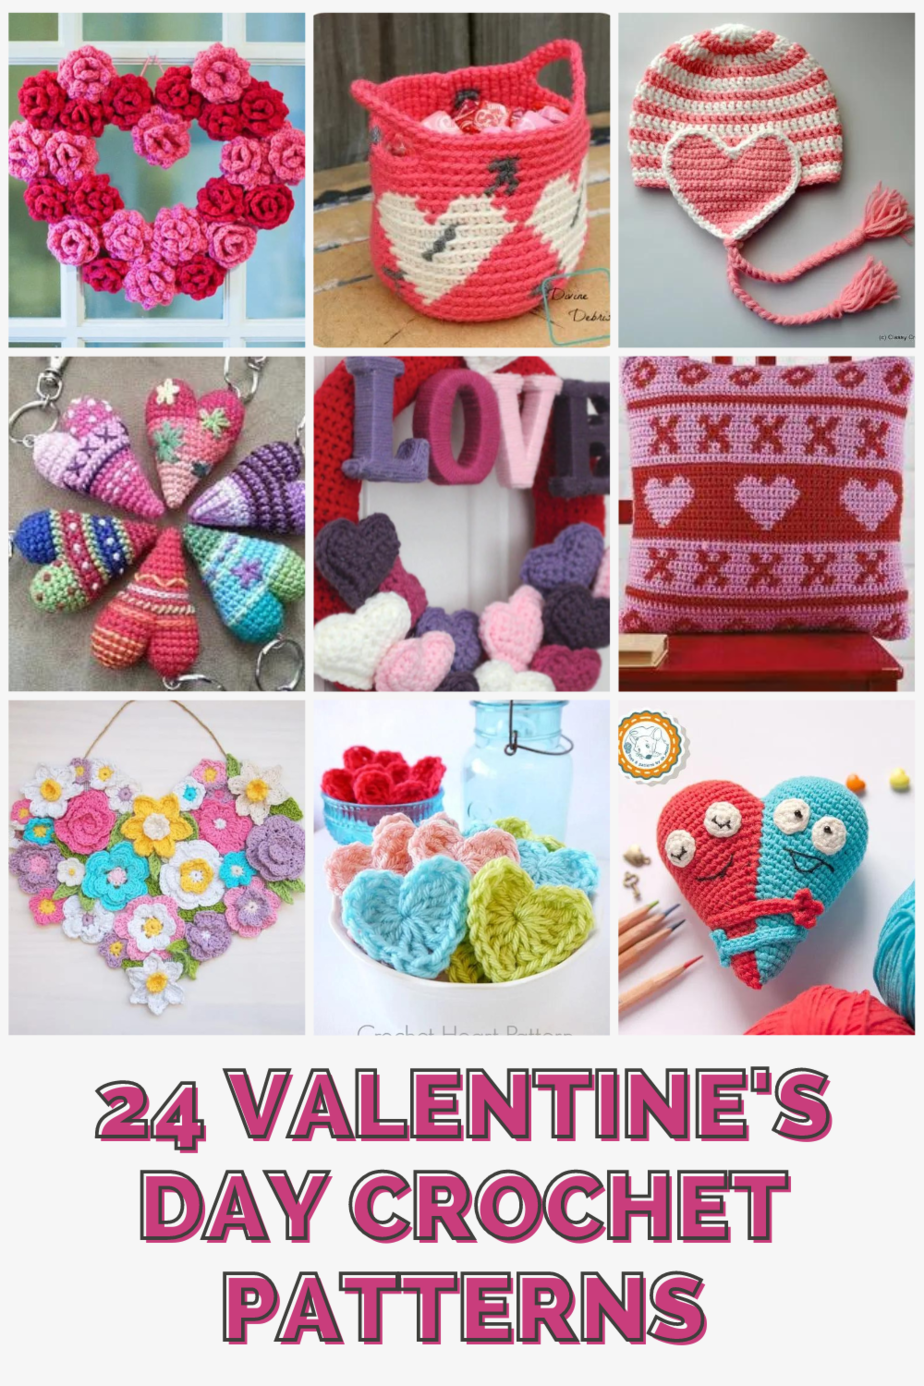 Easy Valentine's Day Crochet Patterns make great handmade gifts